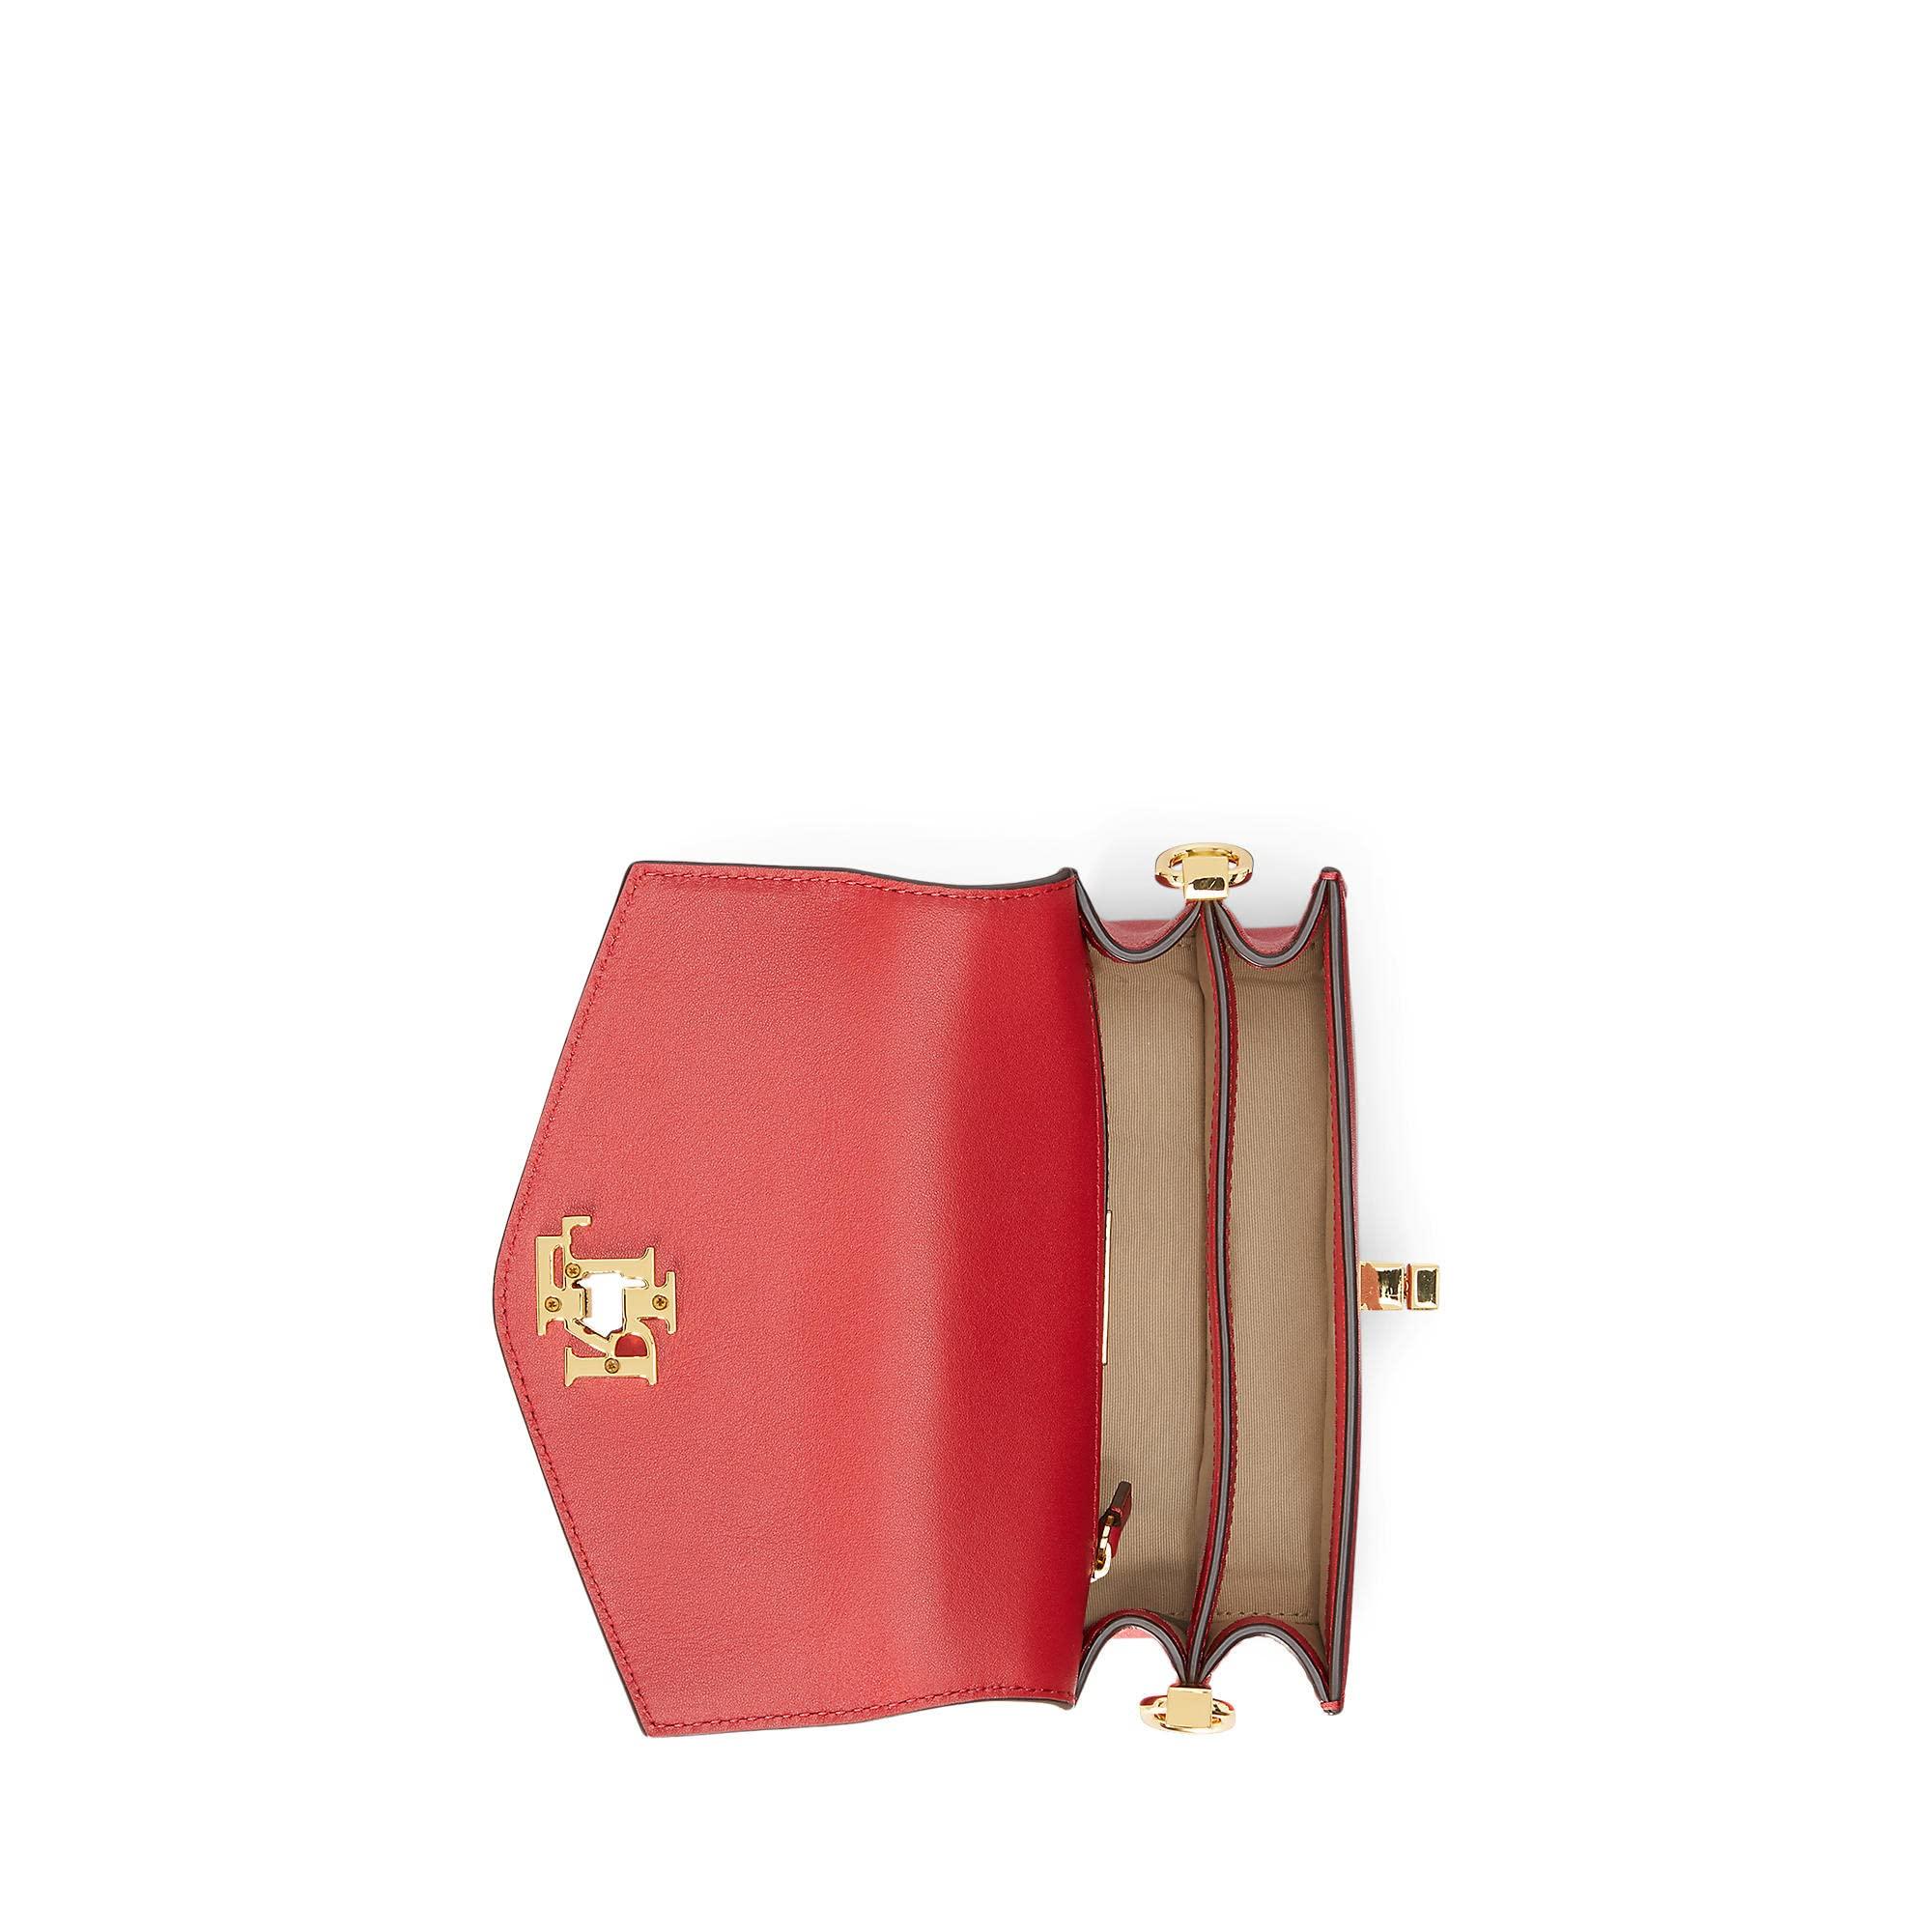 Lauren by Ralph Lauren Tremont Leather Small Crossbody Bag in Red